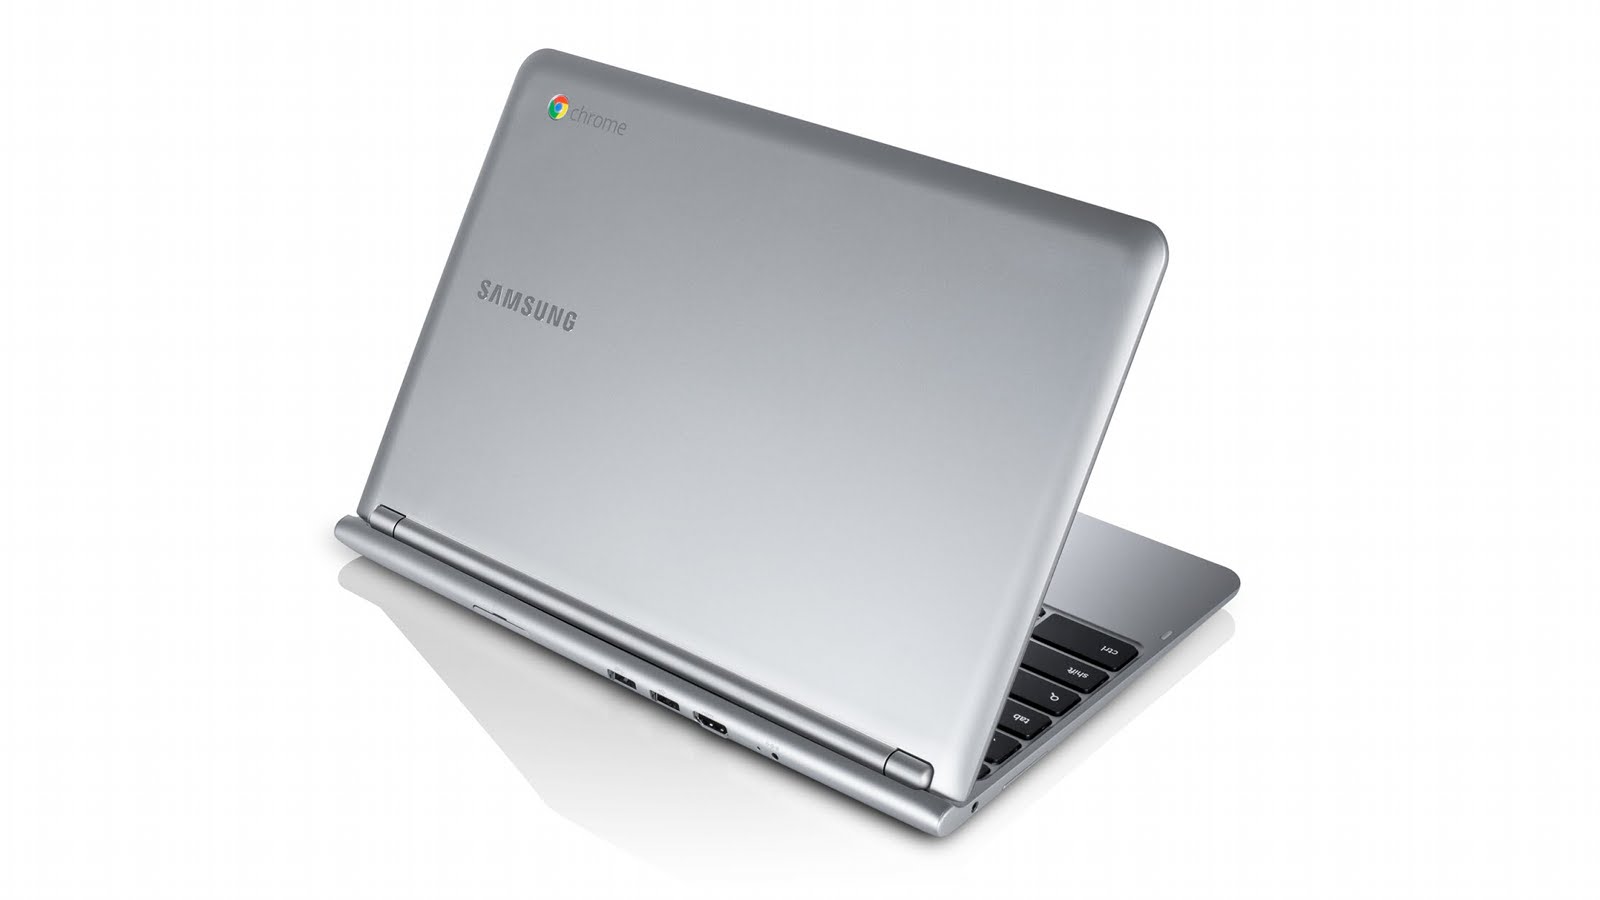 Best-Selling Laptop on Amazon Runs Linux